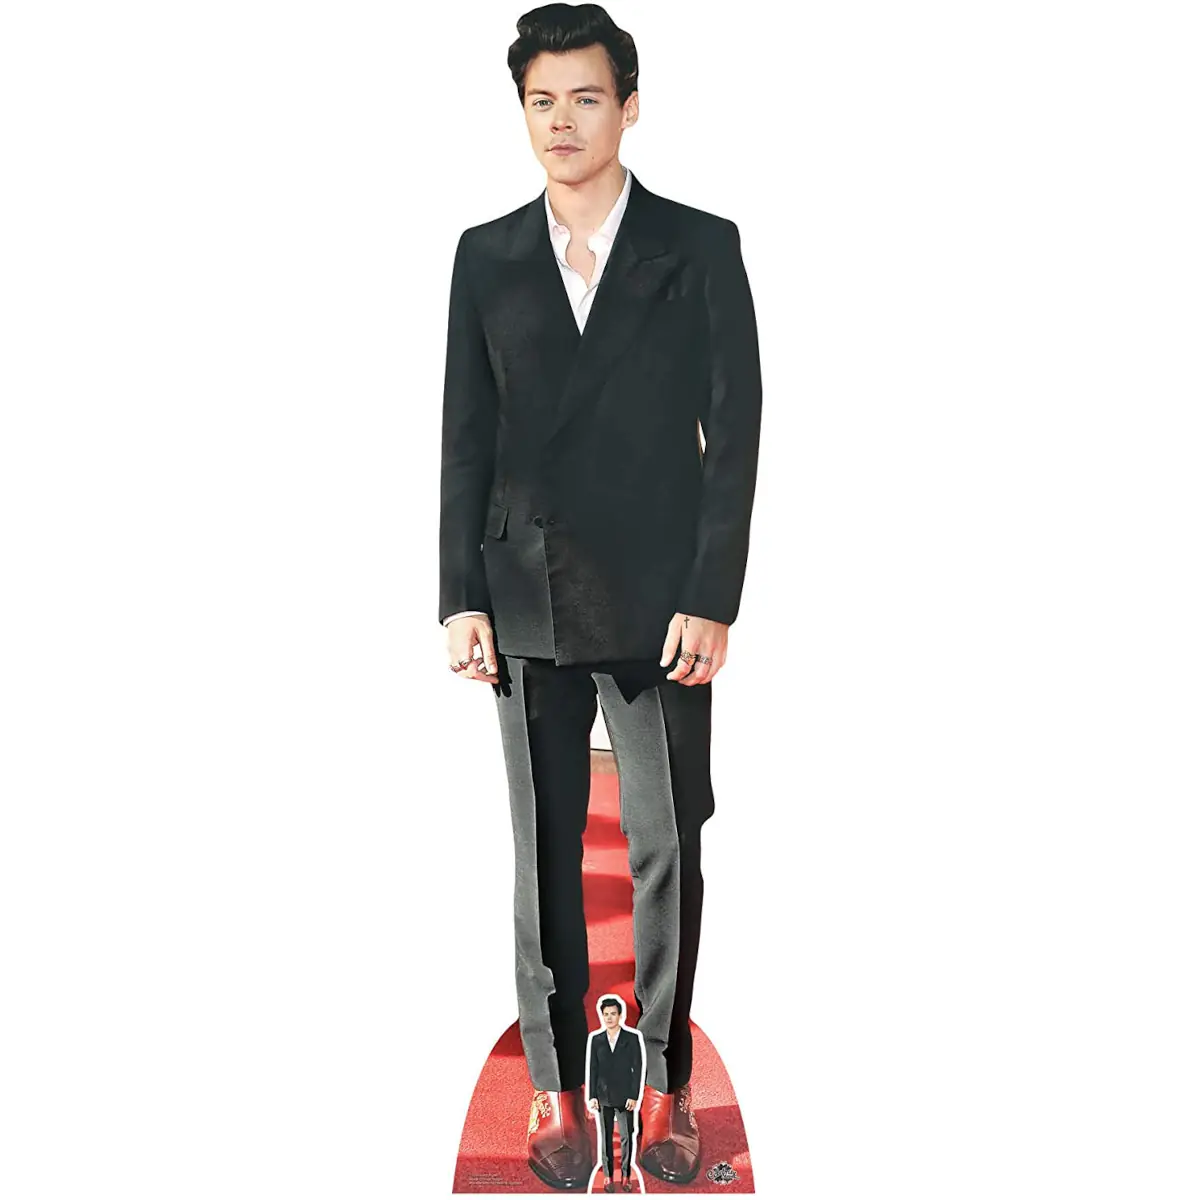 CS734 Harry Styles Red Carpet English Singer Lifesize Mini Cardboard Cutout Standee